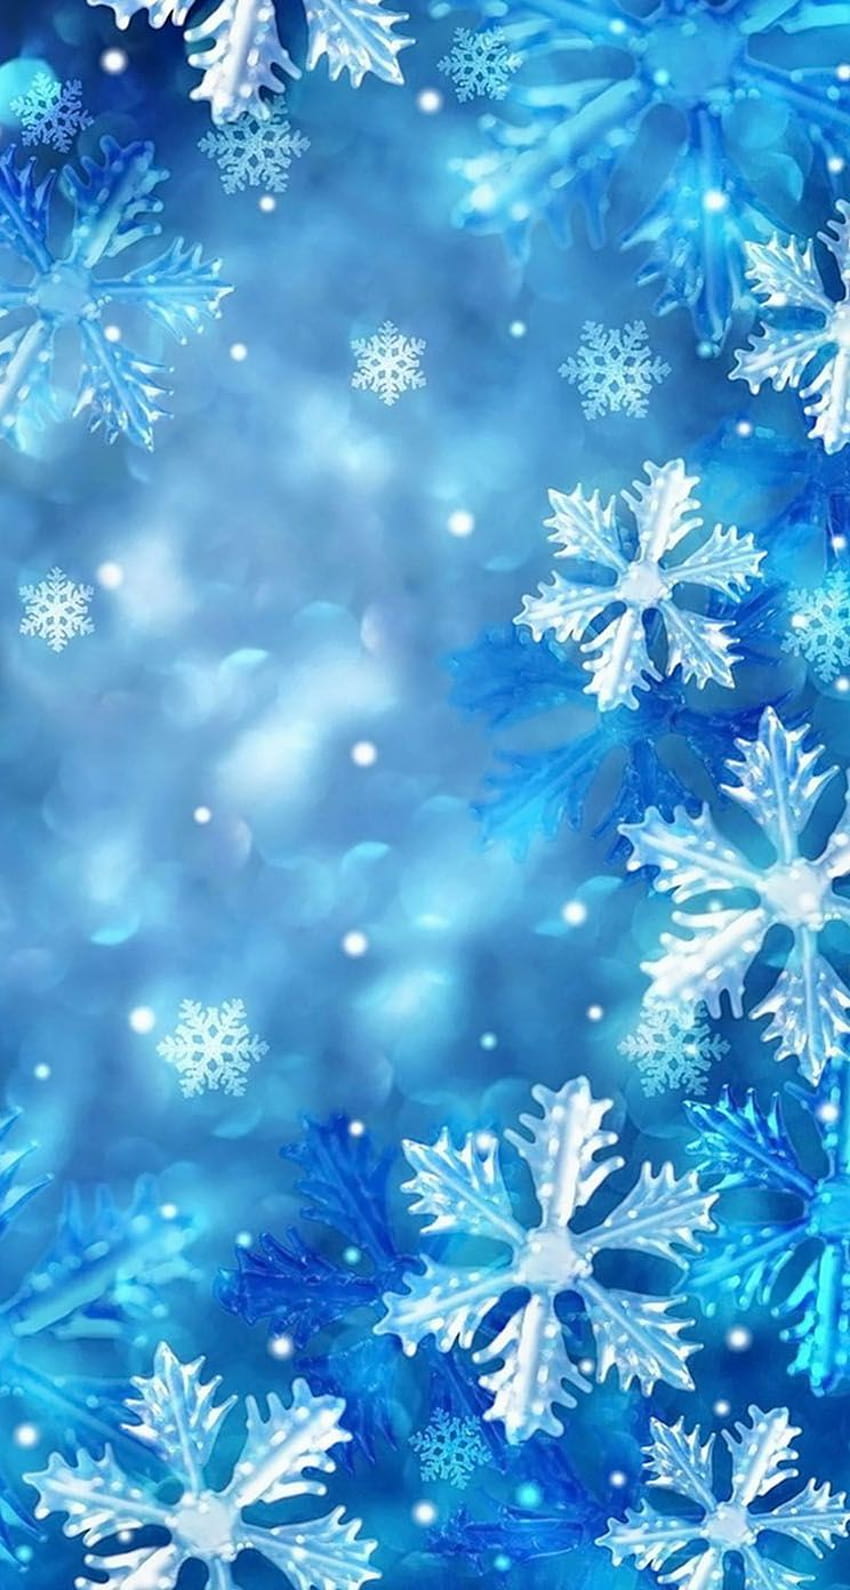 Snowflake on Dog, cute winter iphone HD phone wallpaper